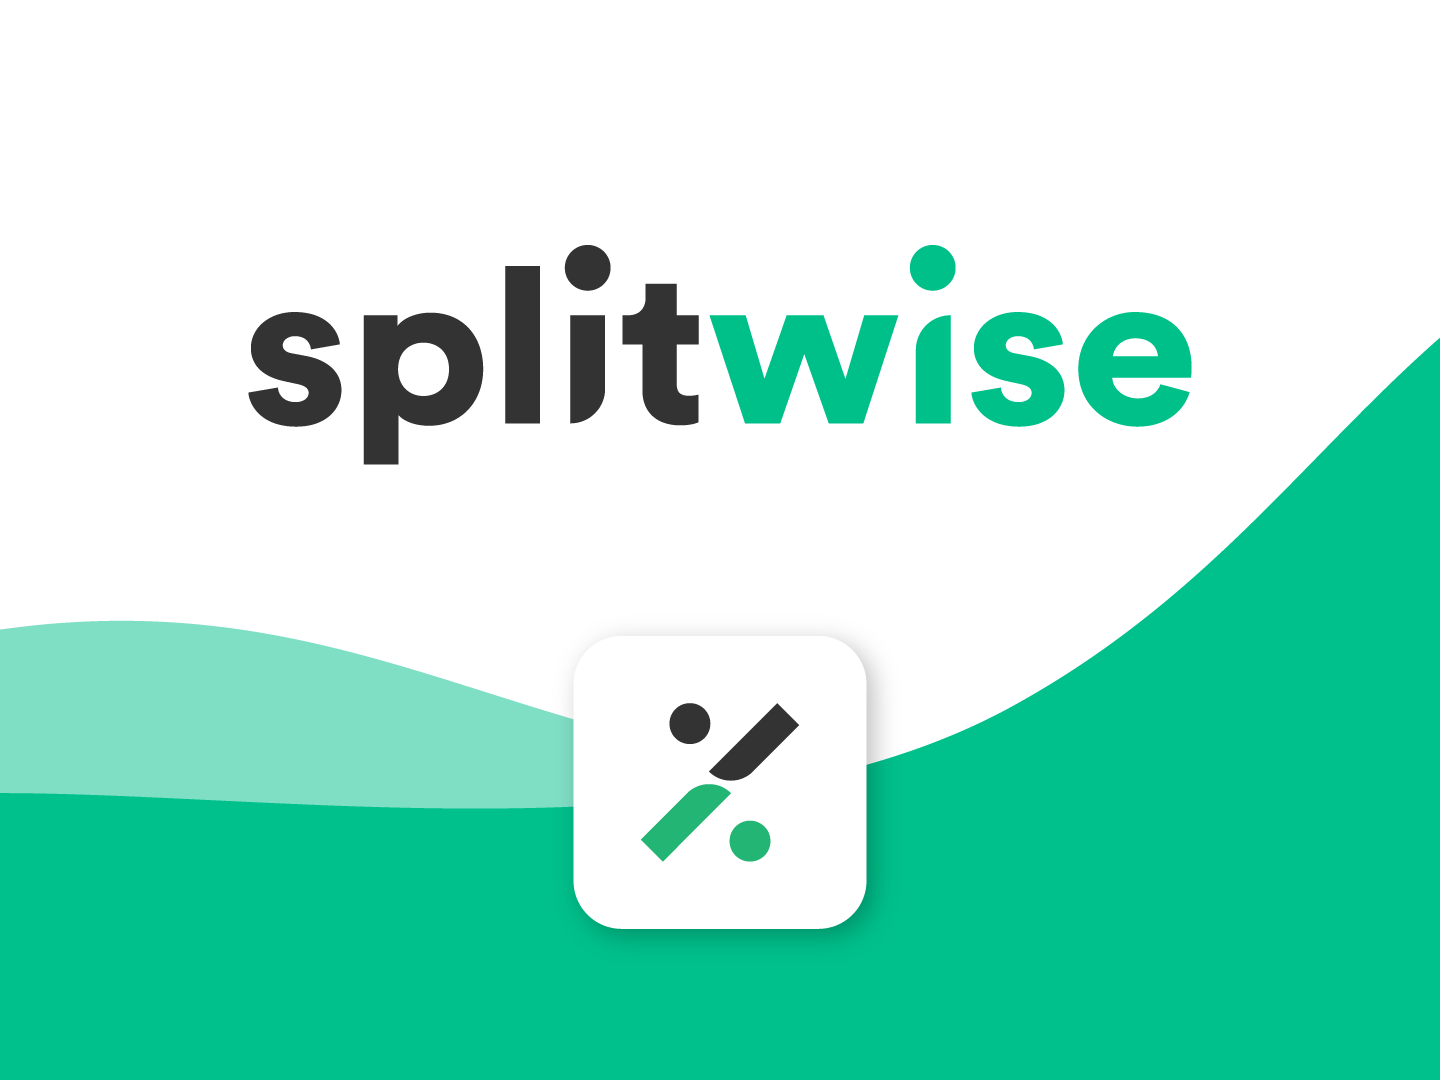 Splitwise Rebrand by Fred Robert on Dribbble